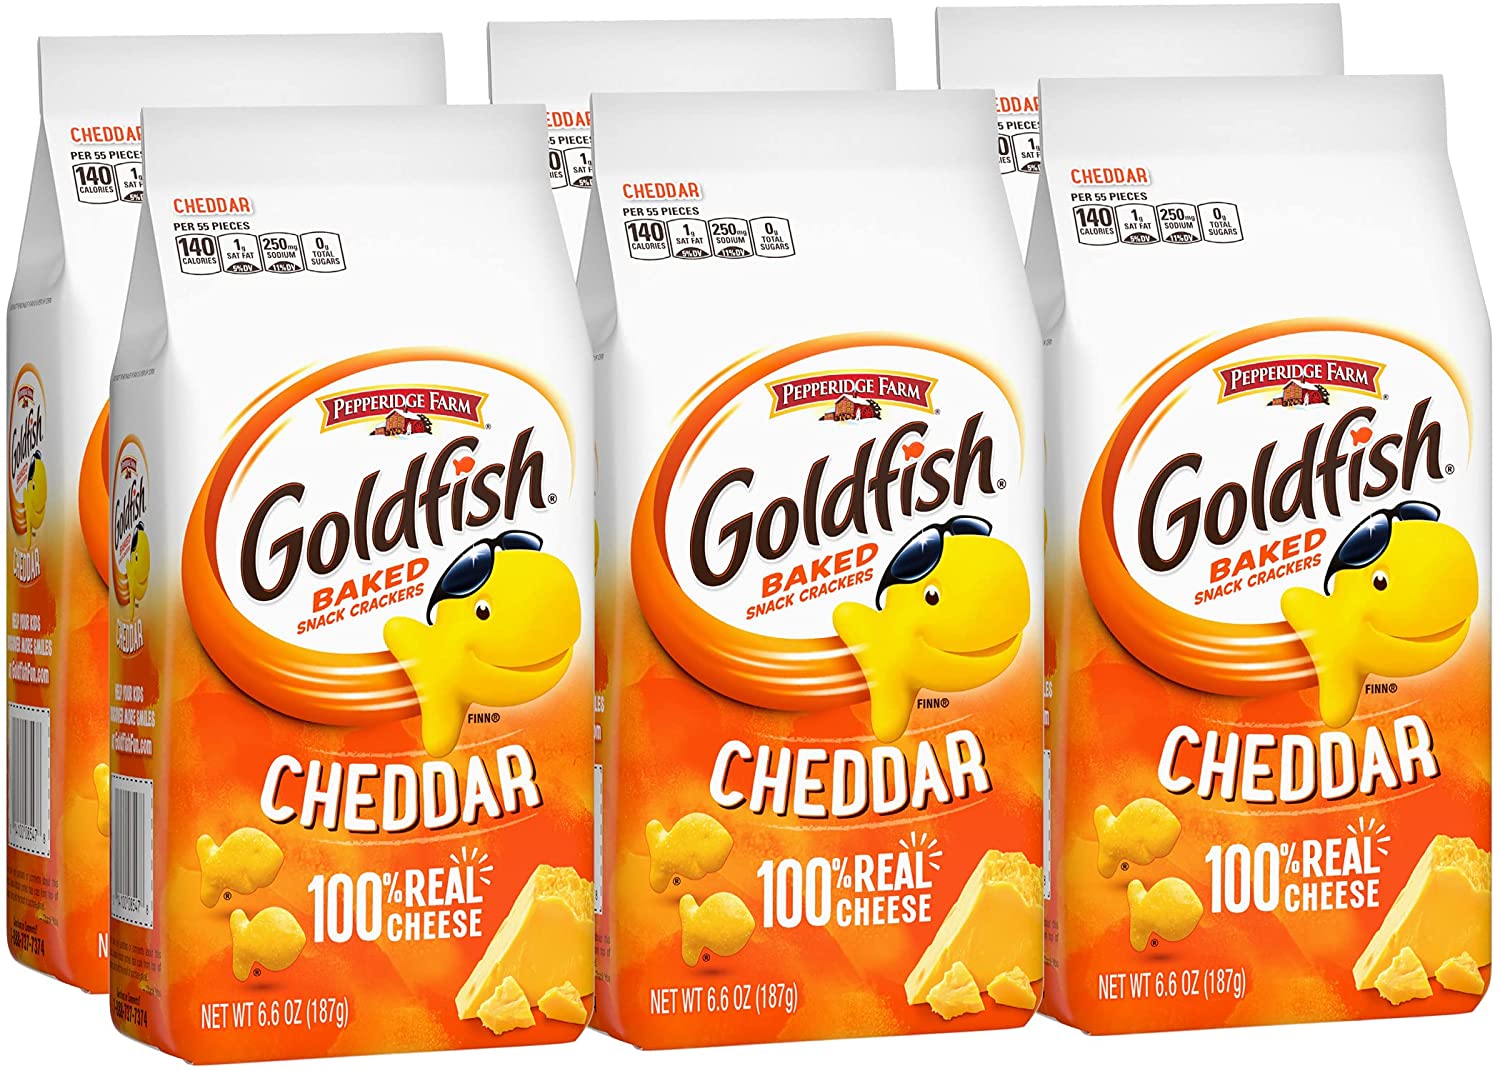 Pepperidge Farm Goldfish Cheddar Crackers 6pk $5.58 shipped